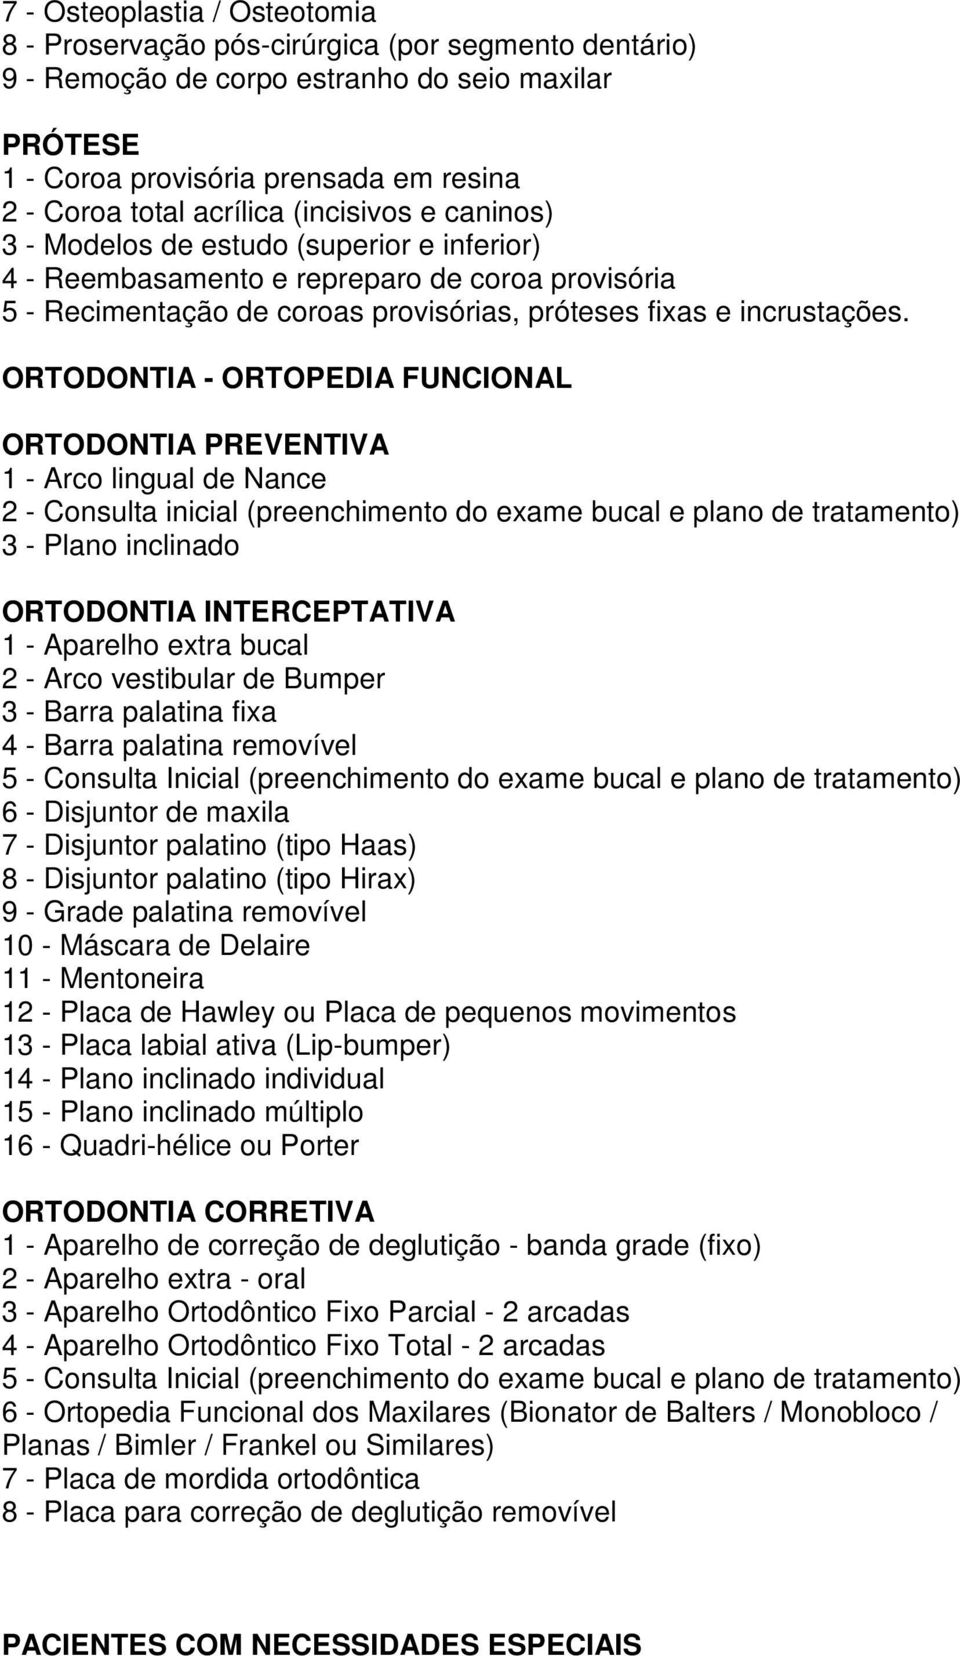 ORTODONTIA - ORTOPEDIA FUNCIONAL ORTODONTIA PREVENTIVA 1 - Arco lingual de Nance 2 - Consulta inicial (preenchimento do exame bucal e plano de tratamento) 3 - Plano inclinado ORTODONTIA